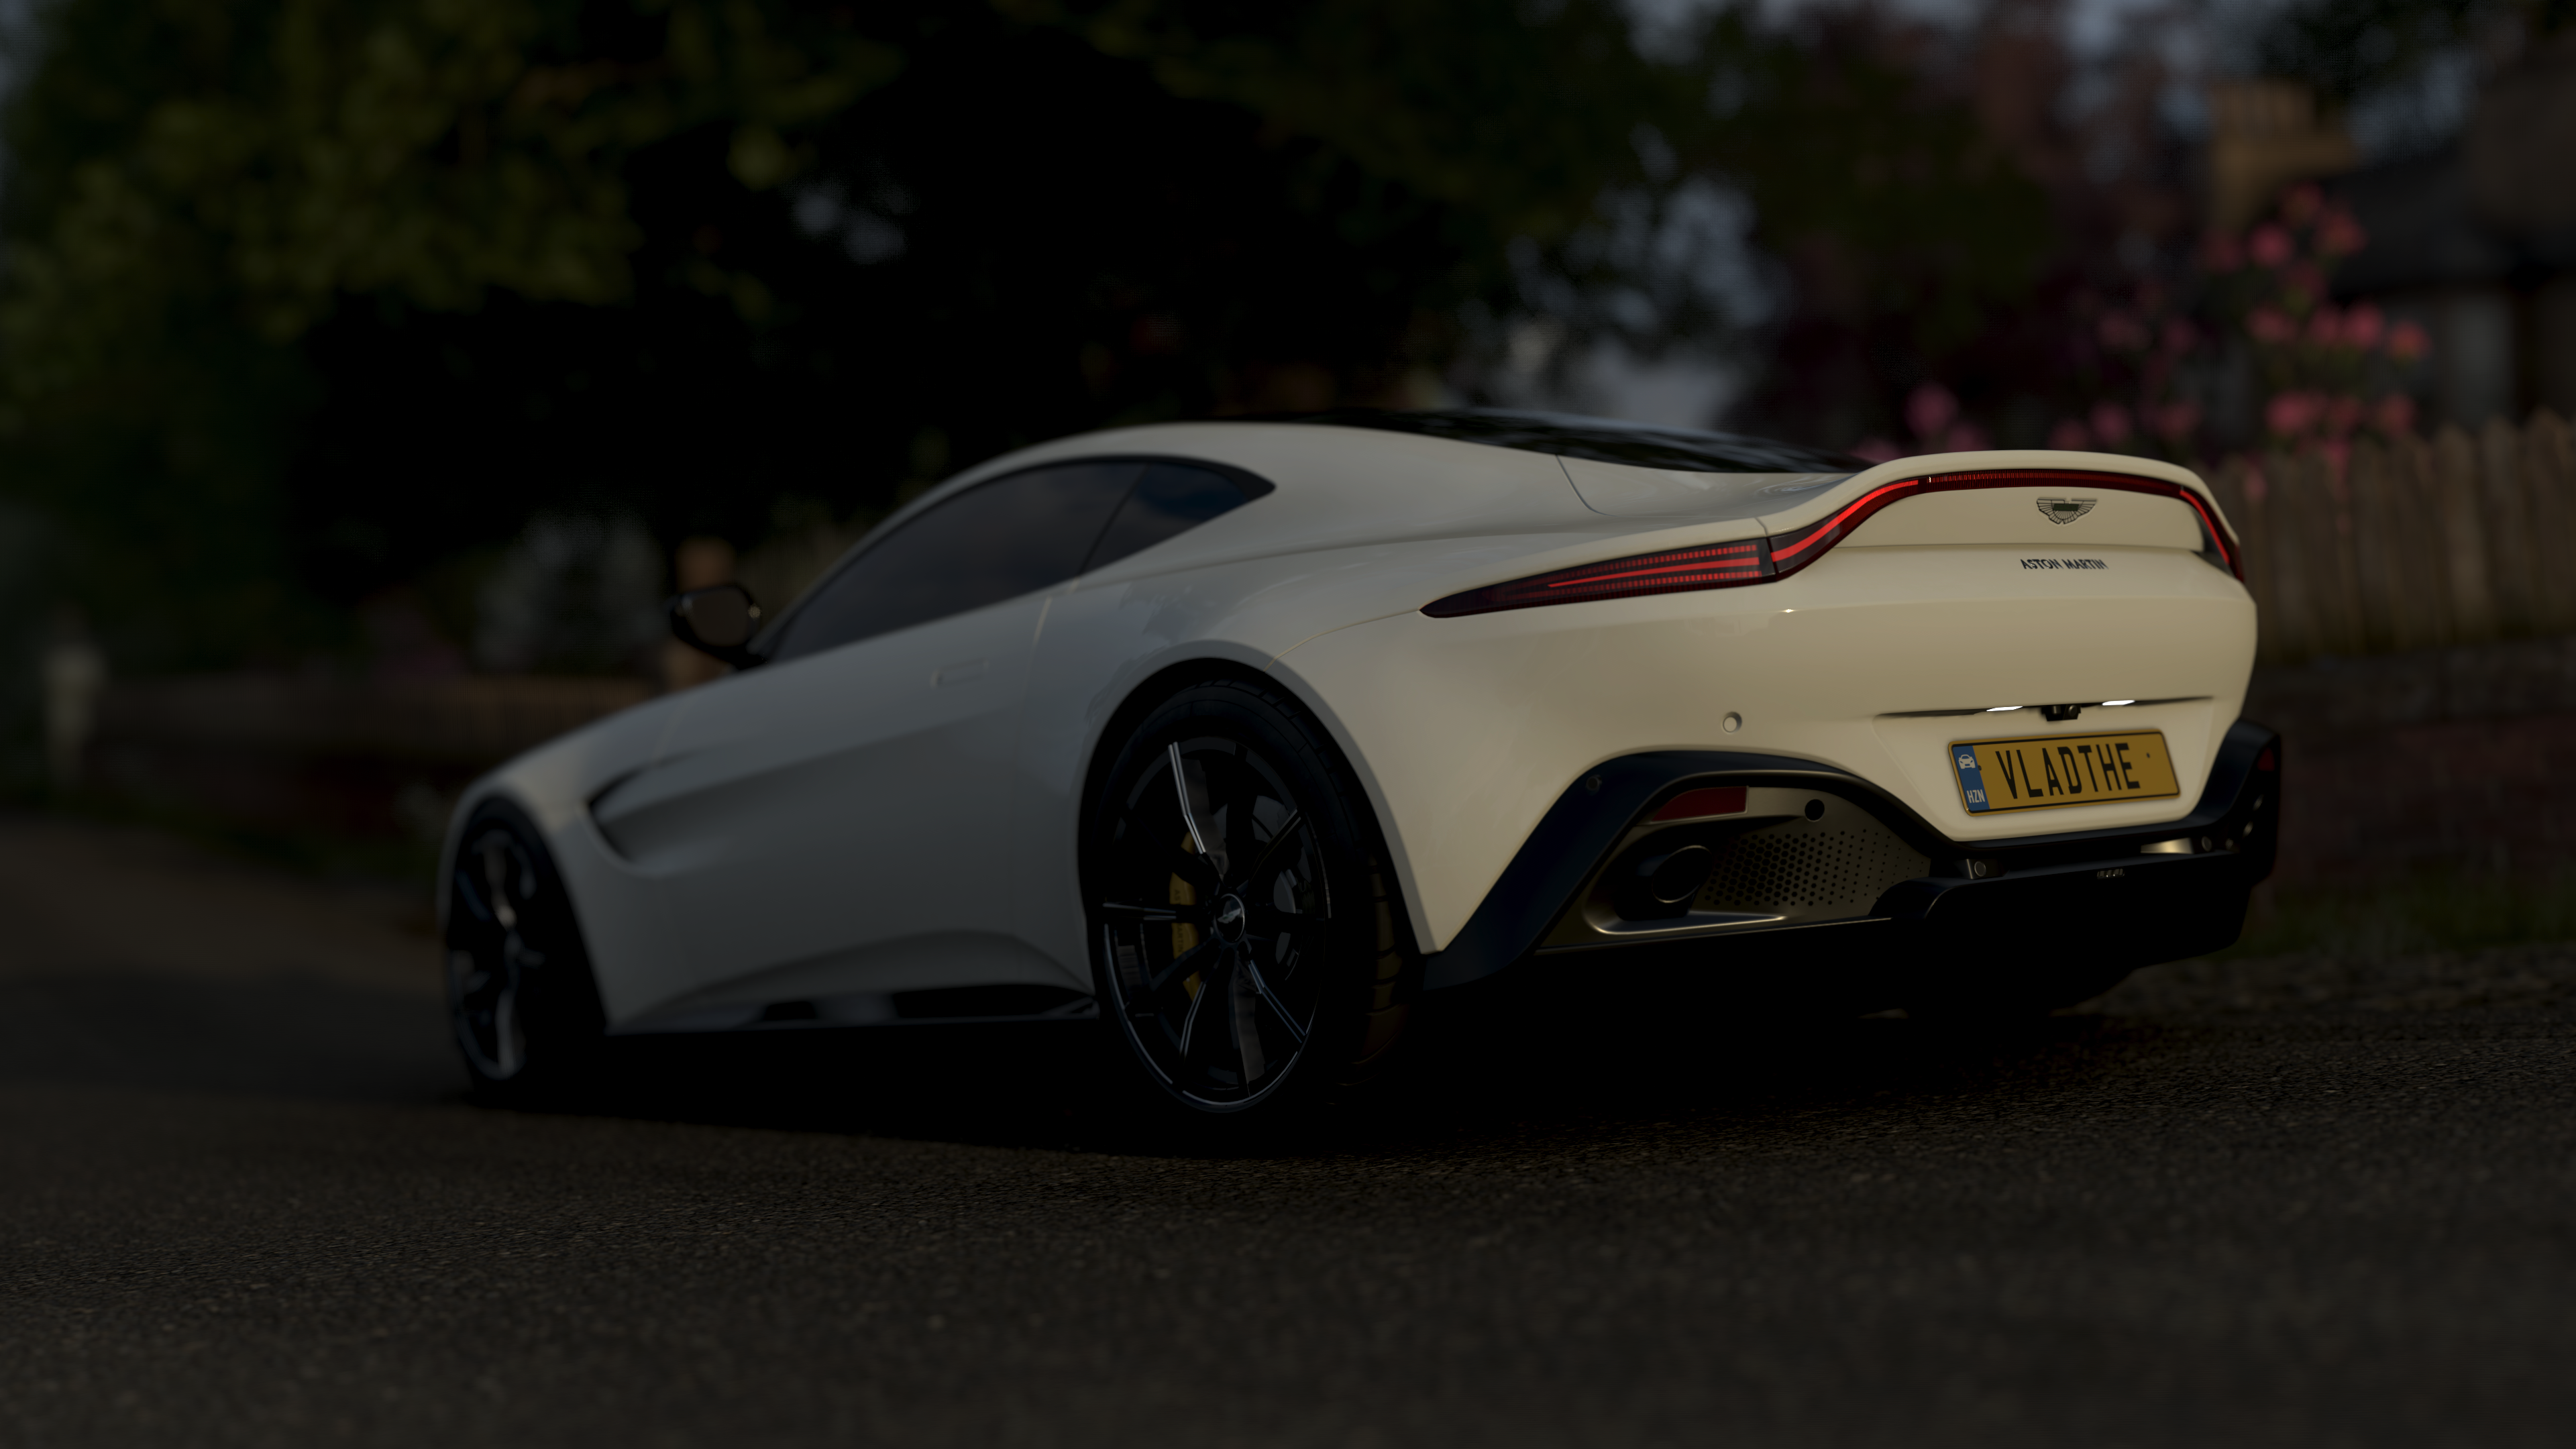 General 3840x2160 Forza Forza Horizon 4 video games car Aston Martin screen shot white cars vehicle